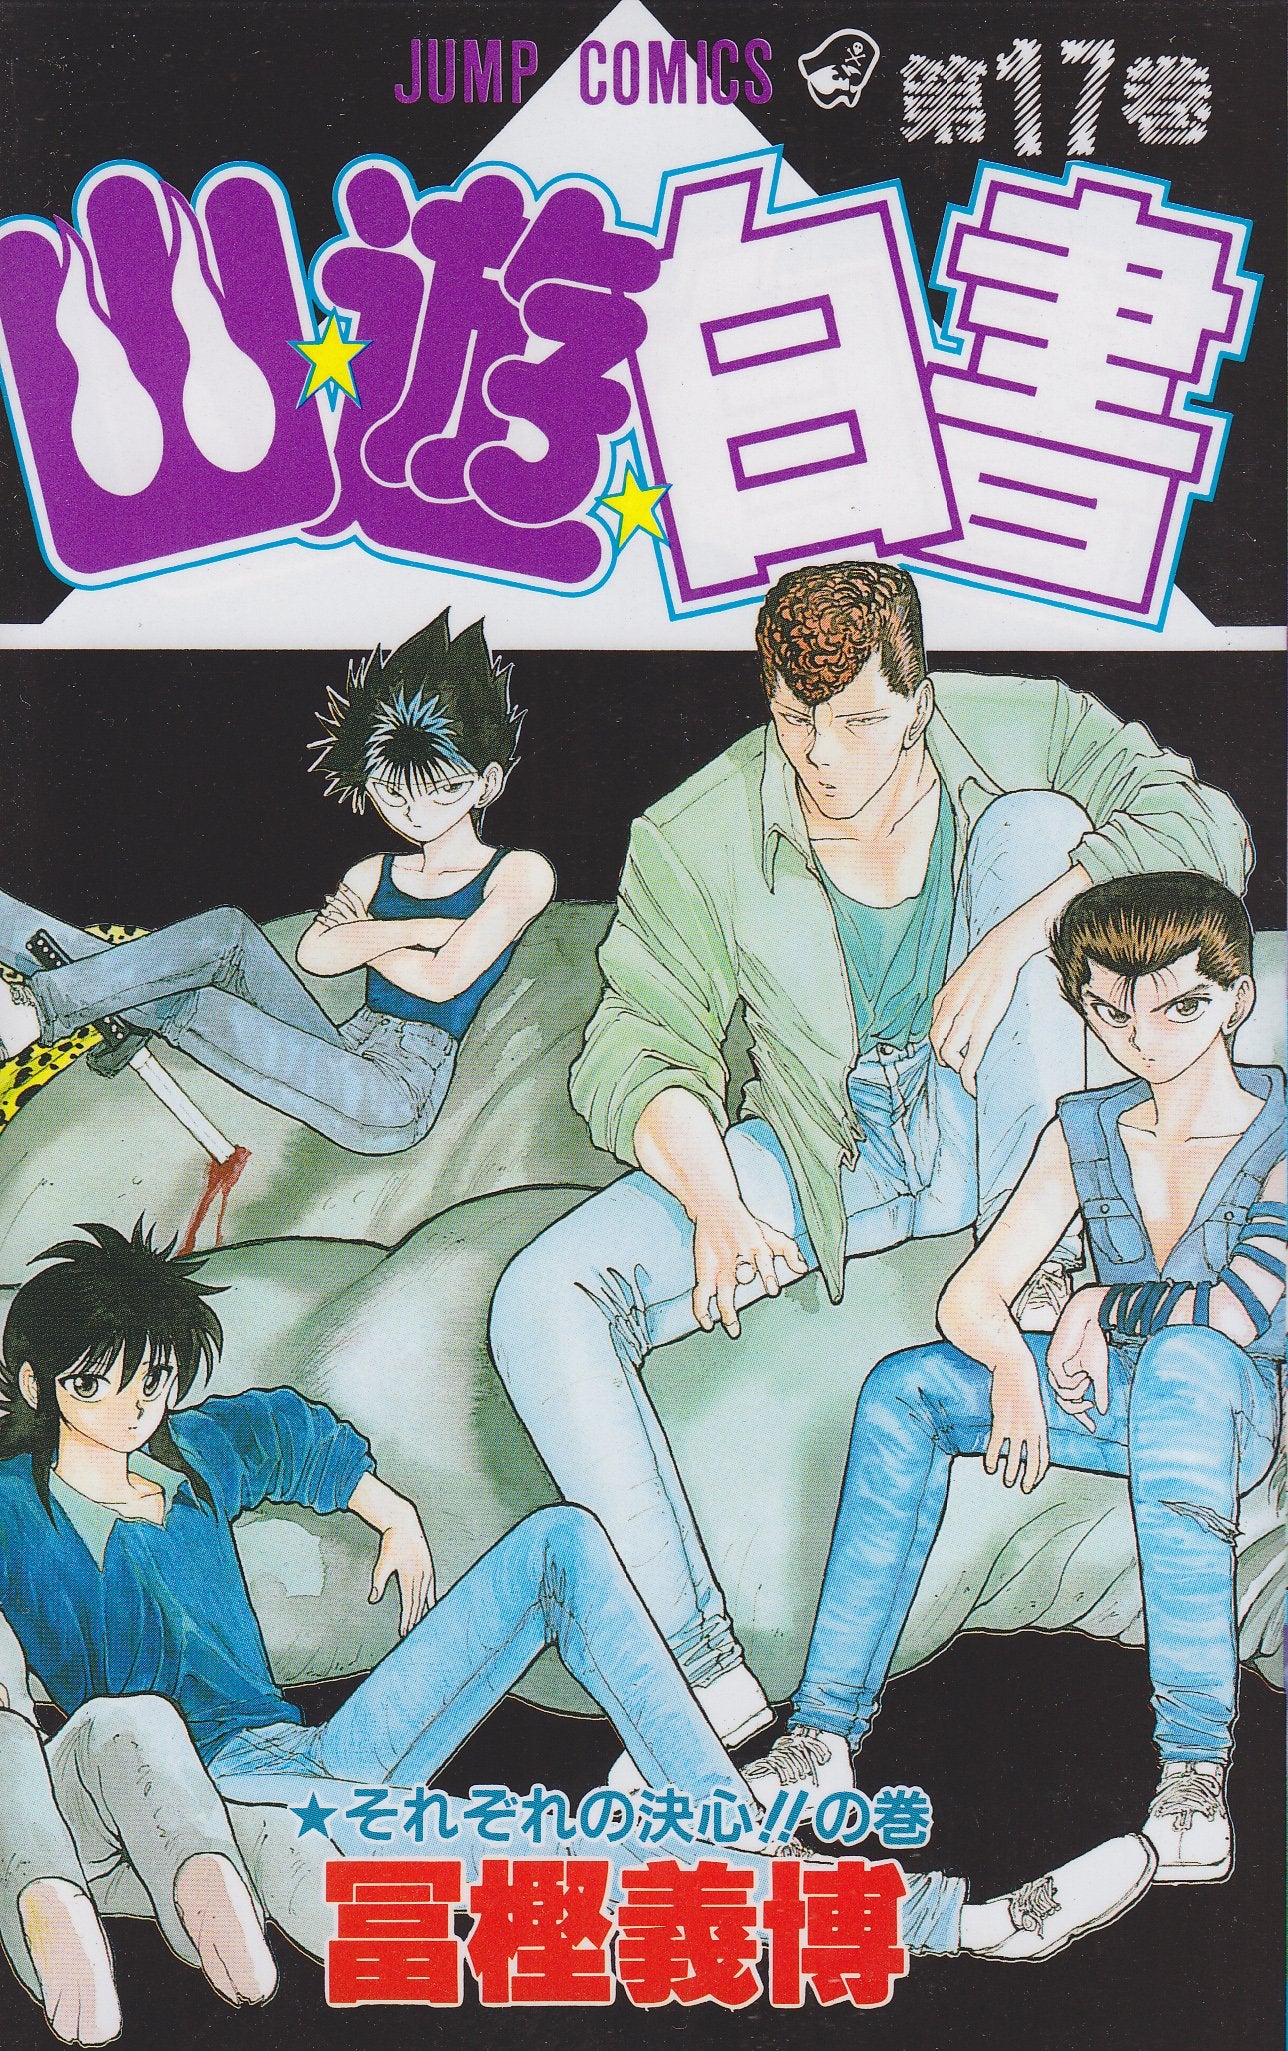 YuYu Hakusho Japanese manga volume 17 front cover